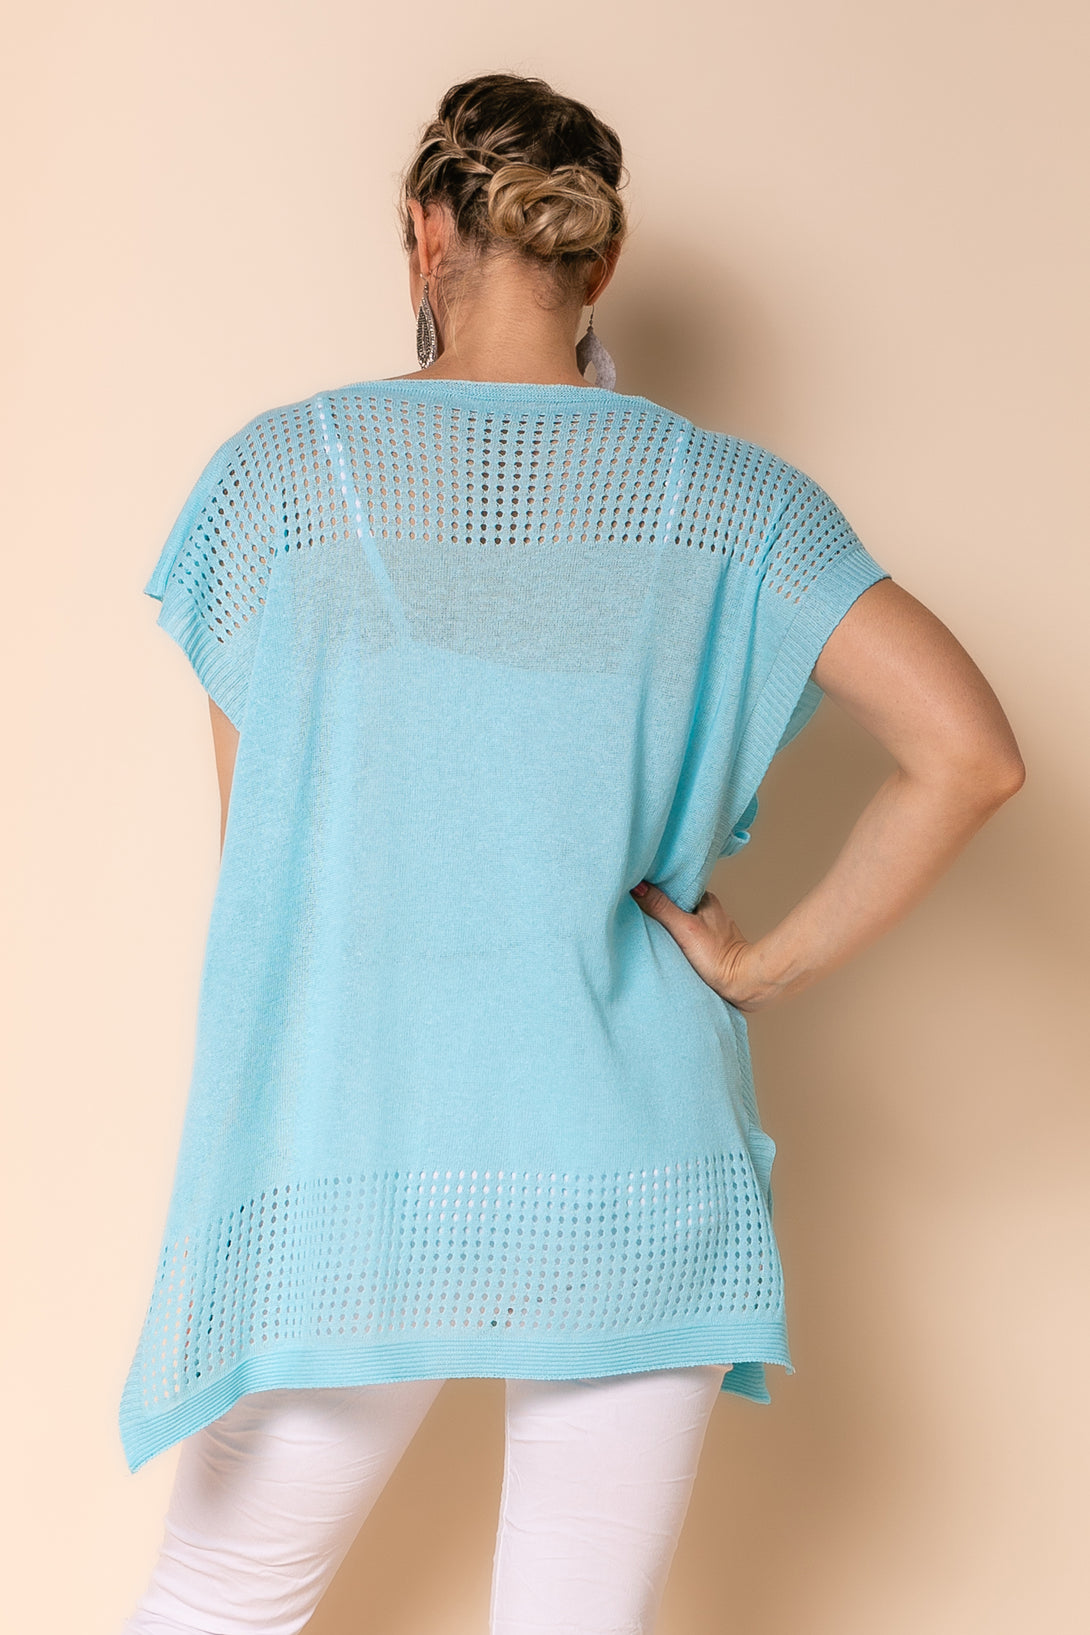 Pele Cotton Blend Poncho in Aqua Mist - Imagine Fashion